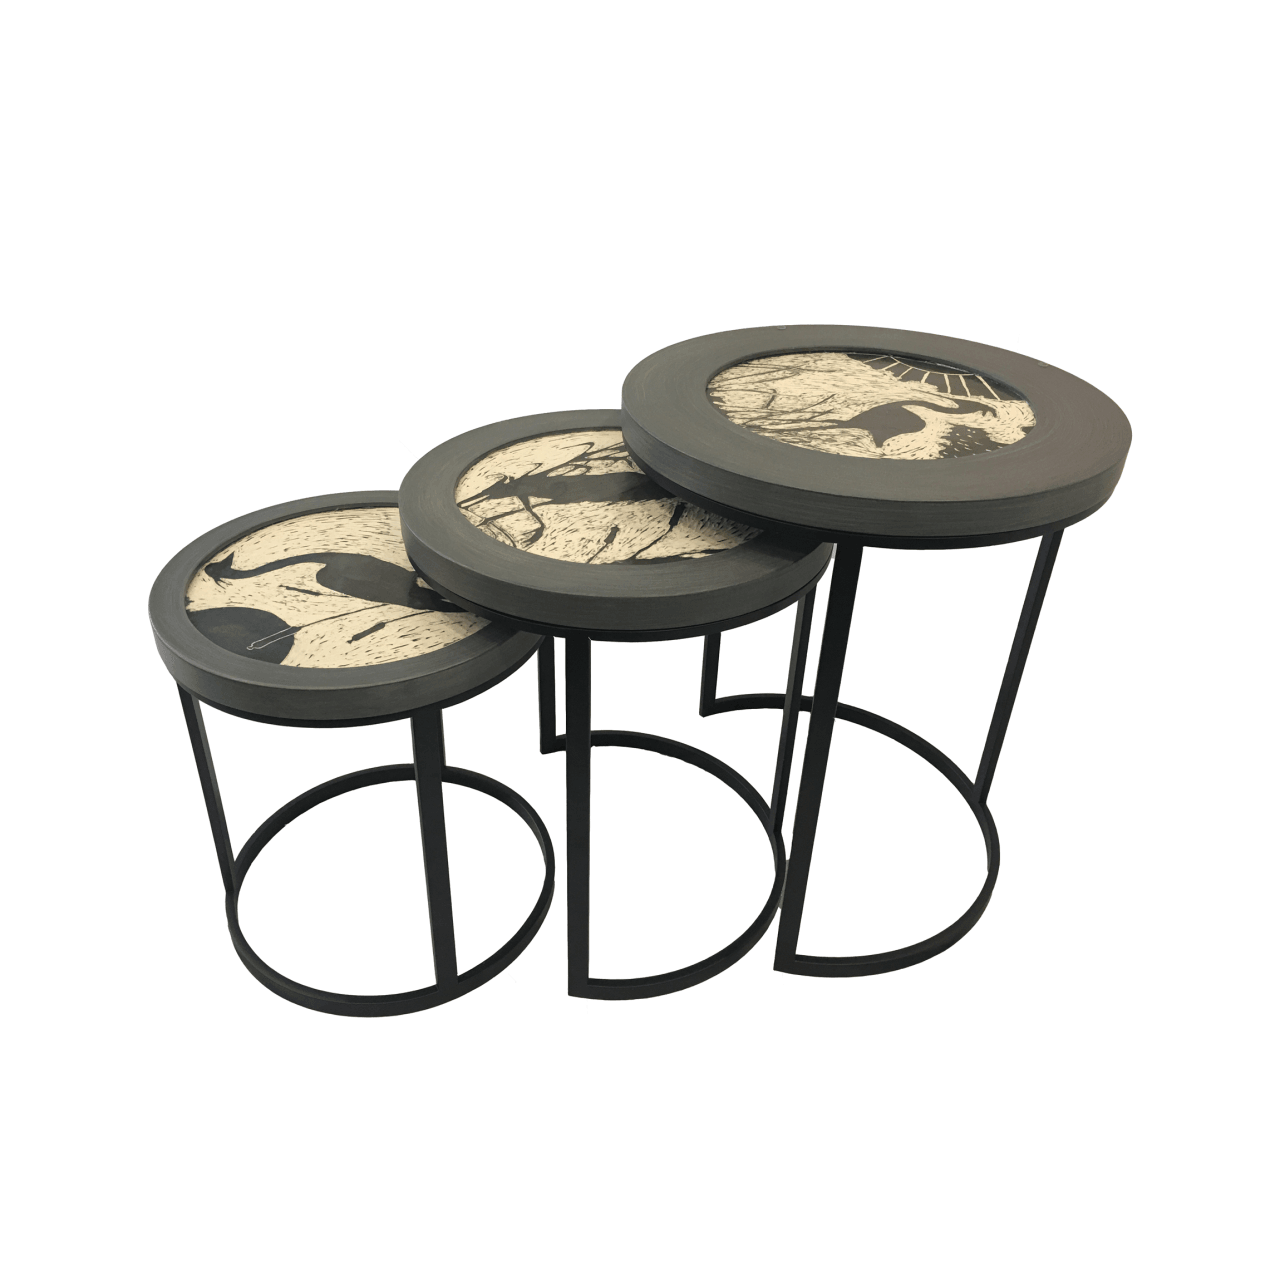 Animal Zygon Coffee Table 100% handmade. Limited Edition